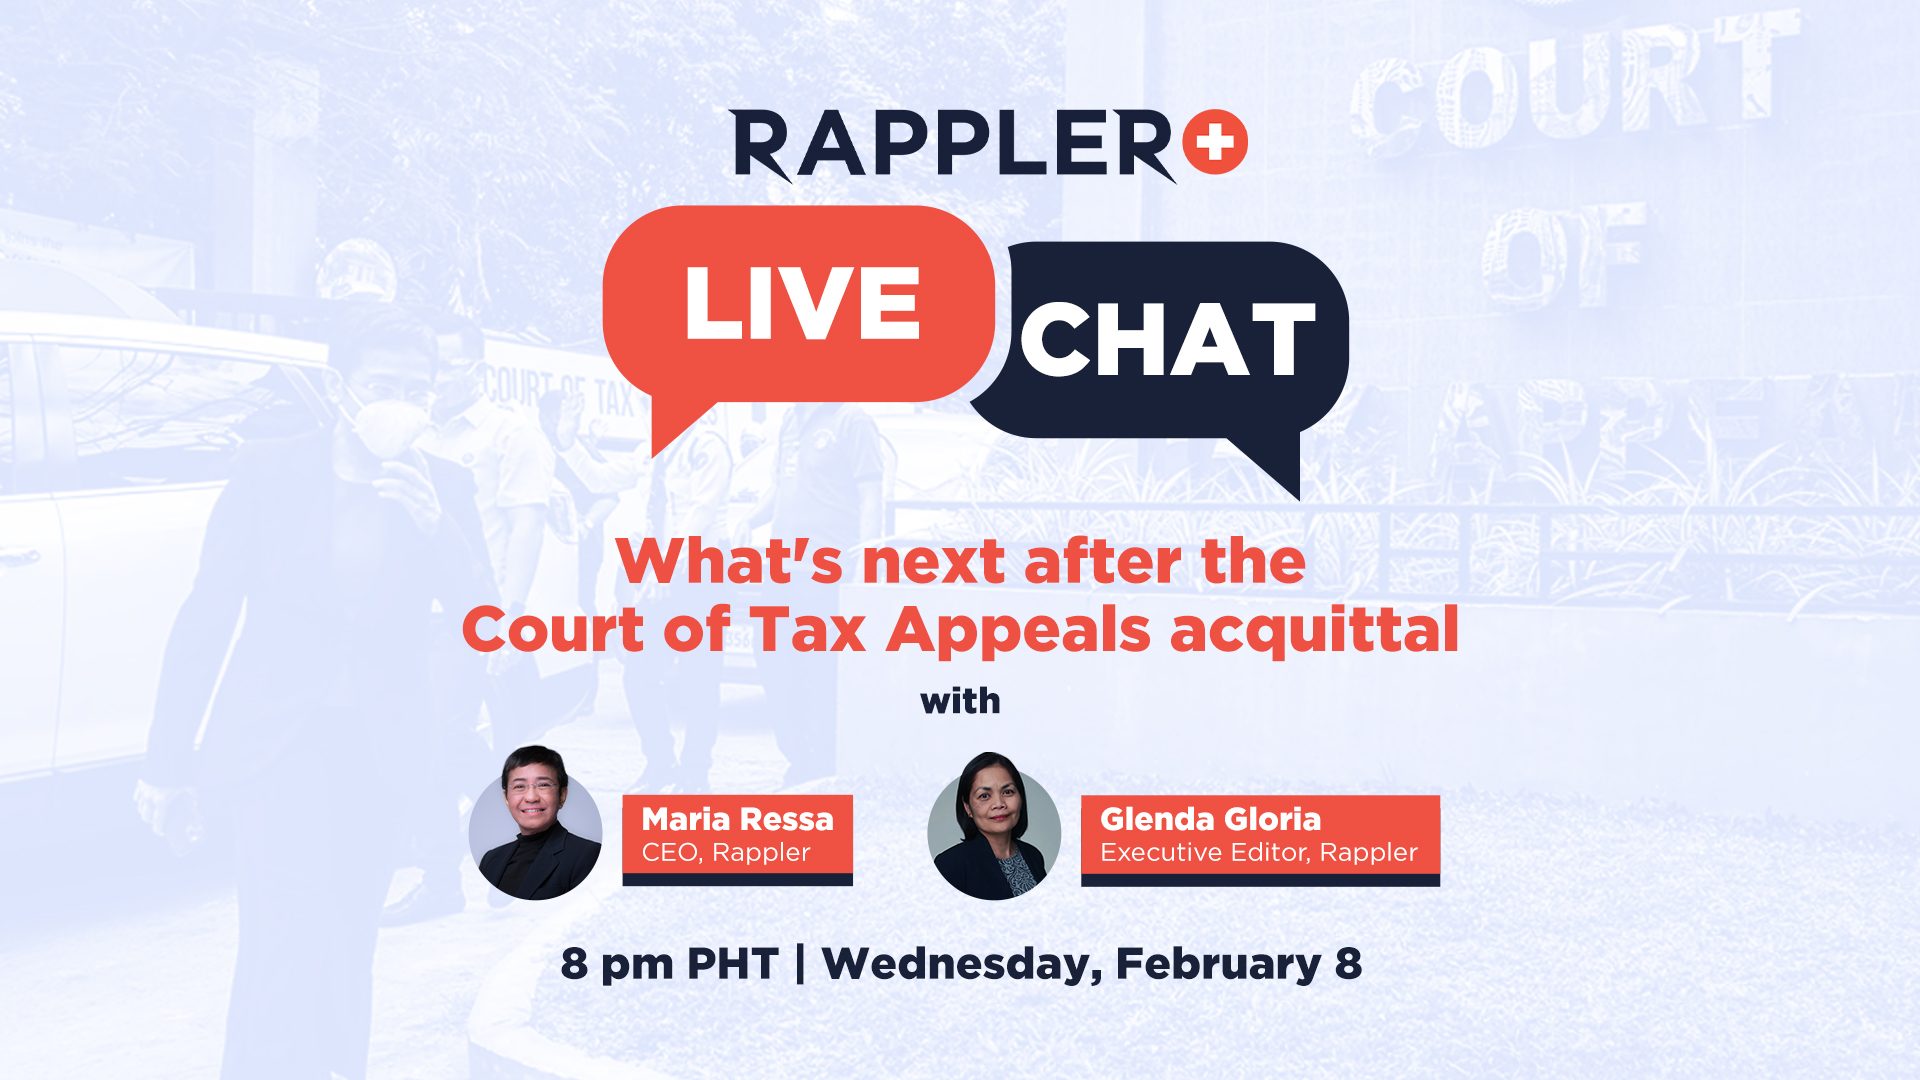 Rappler+ Live Chat with Maria Ressa and Glenda Gloria